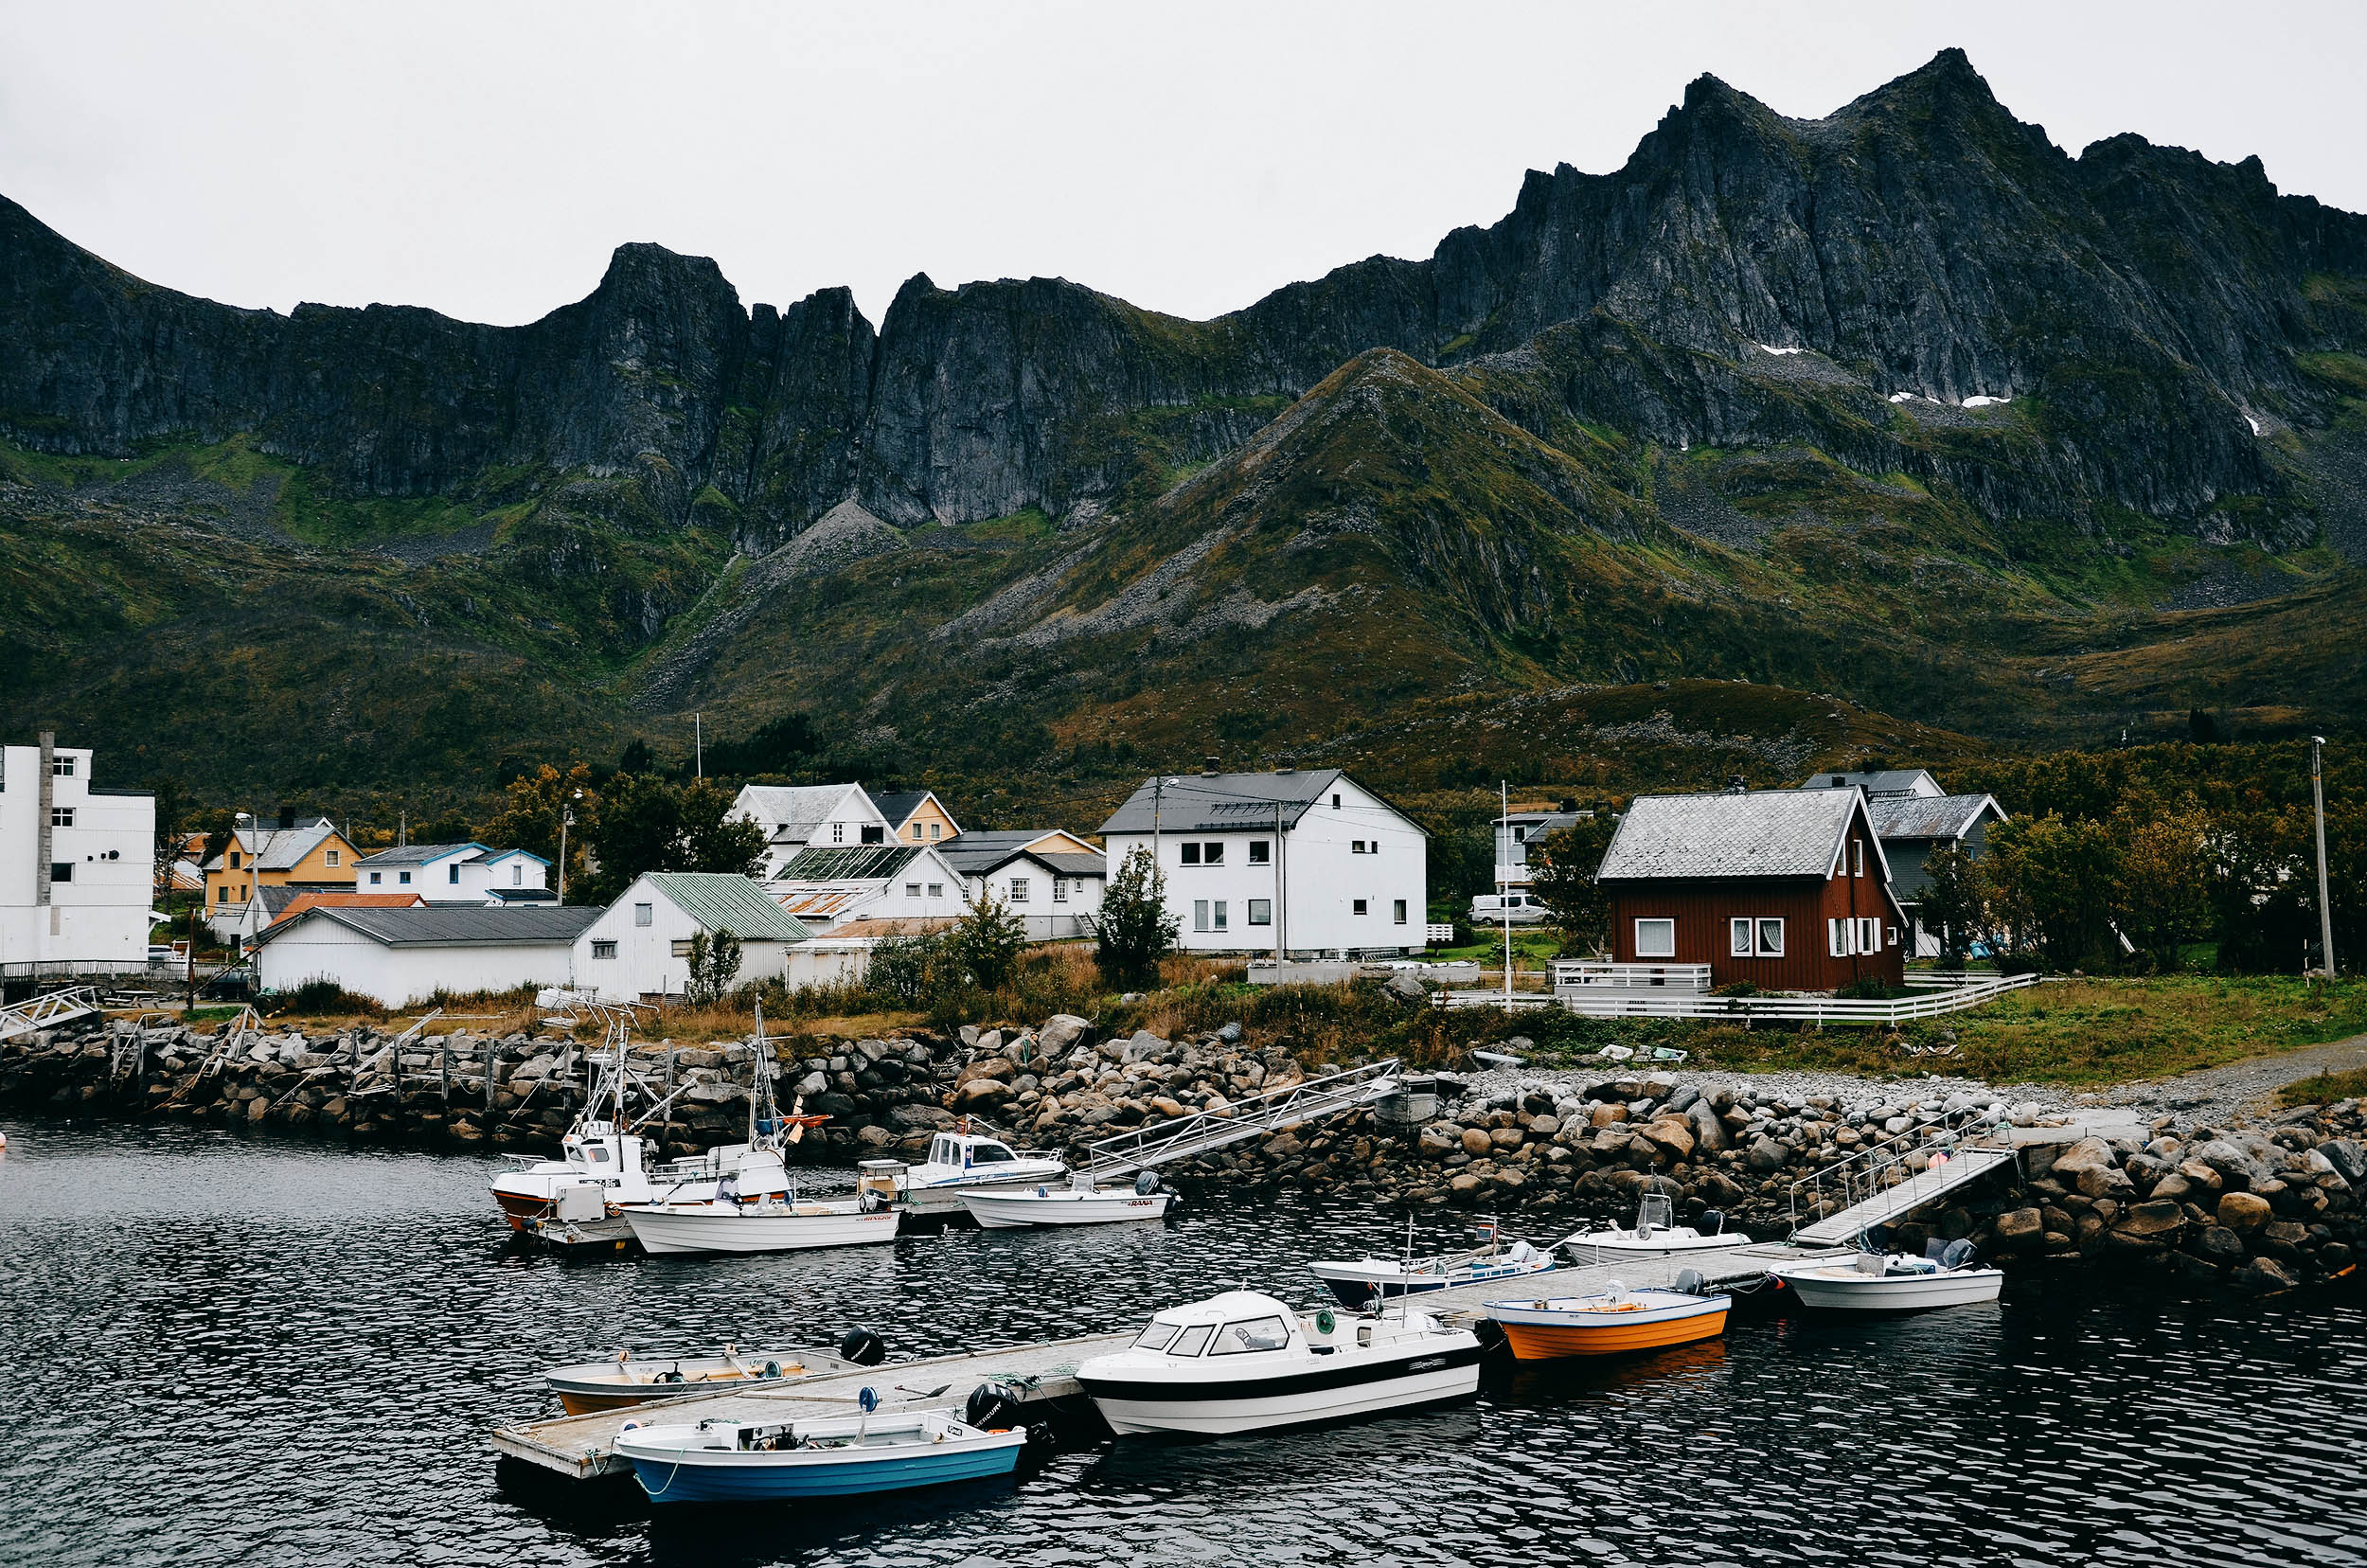 Норвегия 7. Хашта Норвегия. Эвьен Норвегия. Остров госвейр (gasvasr) Норвегия. Норвегия деревня рогвог.